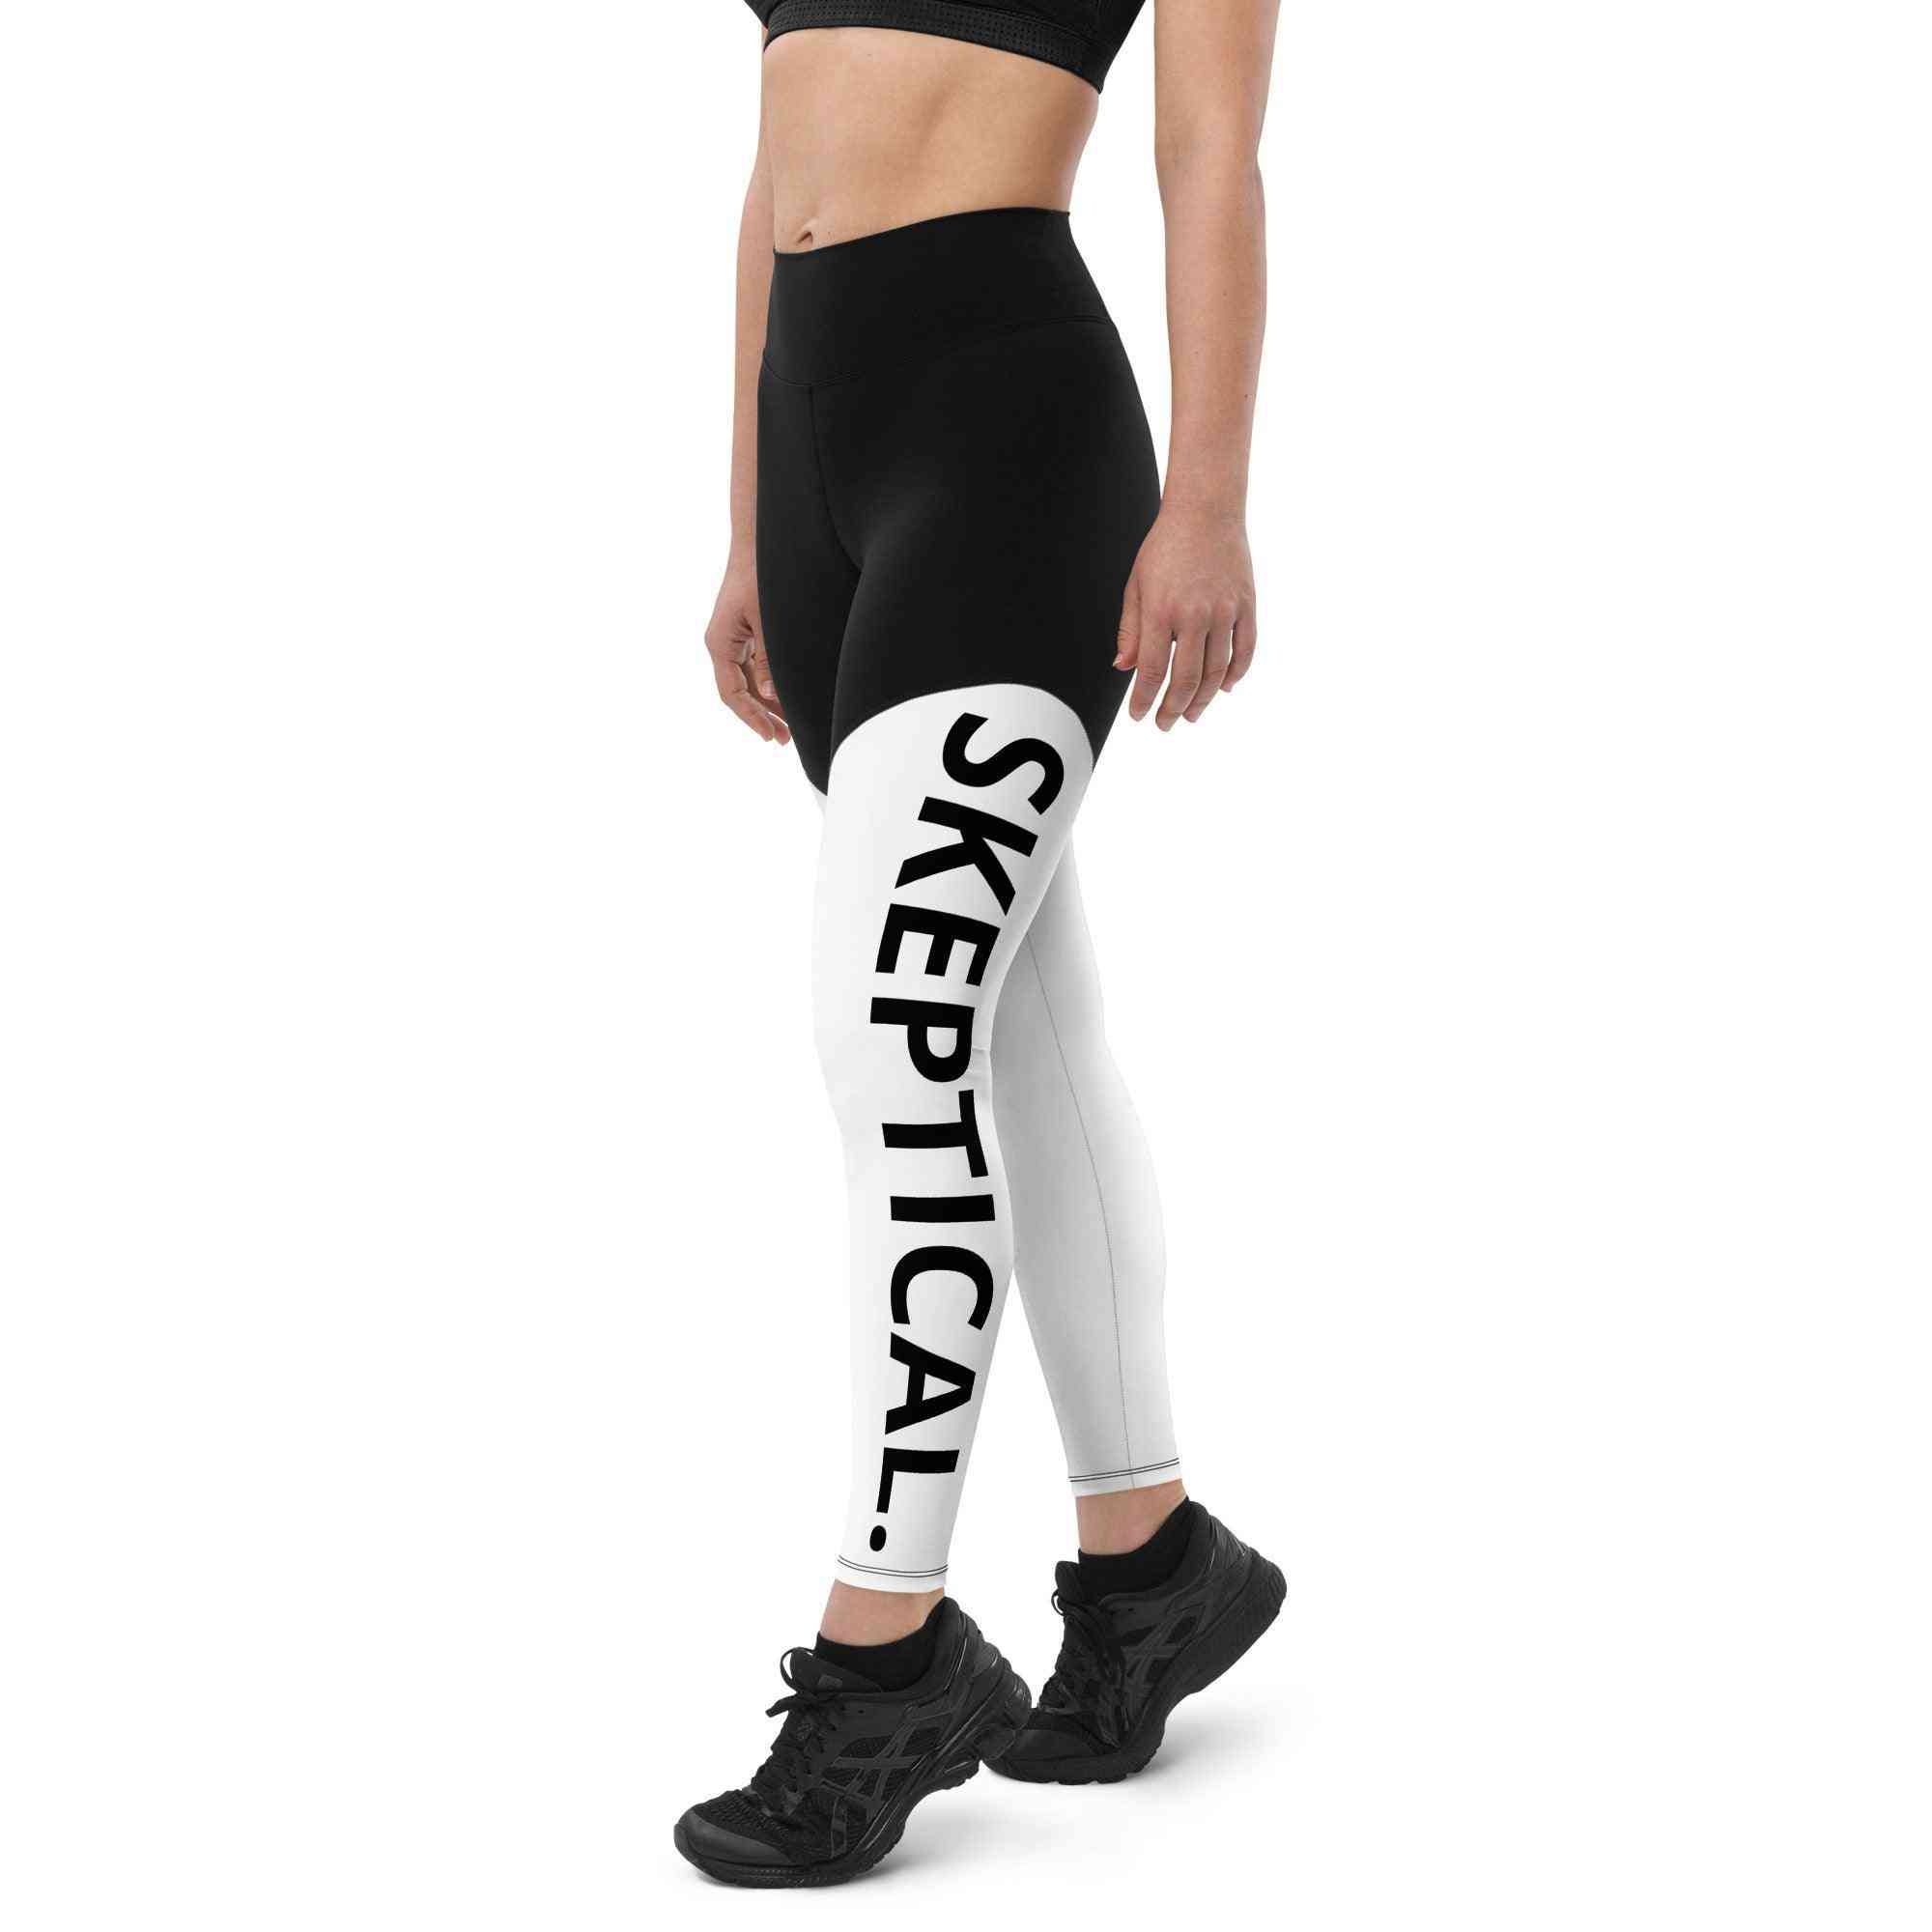 SKEPTICAL. White Sports Leggings- SKEPTICAL BRANDS